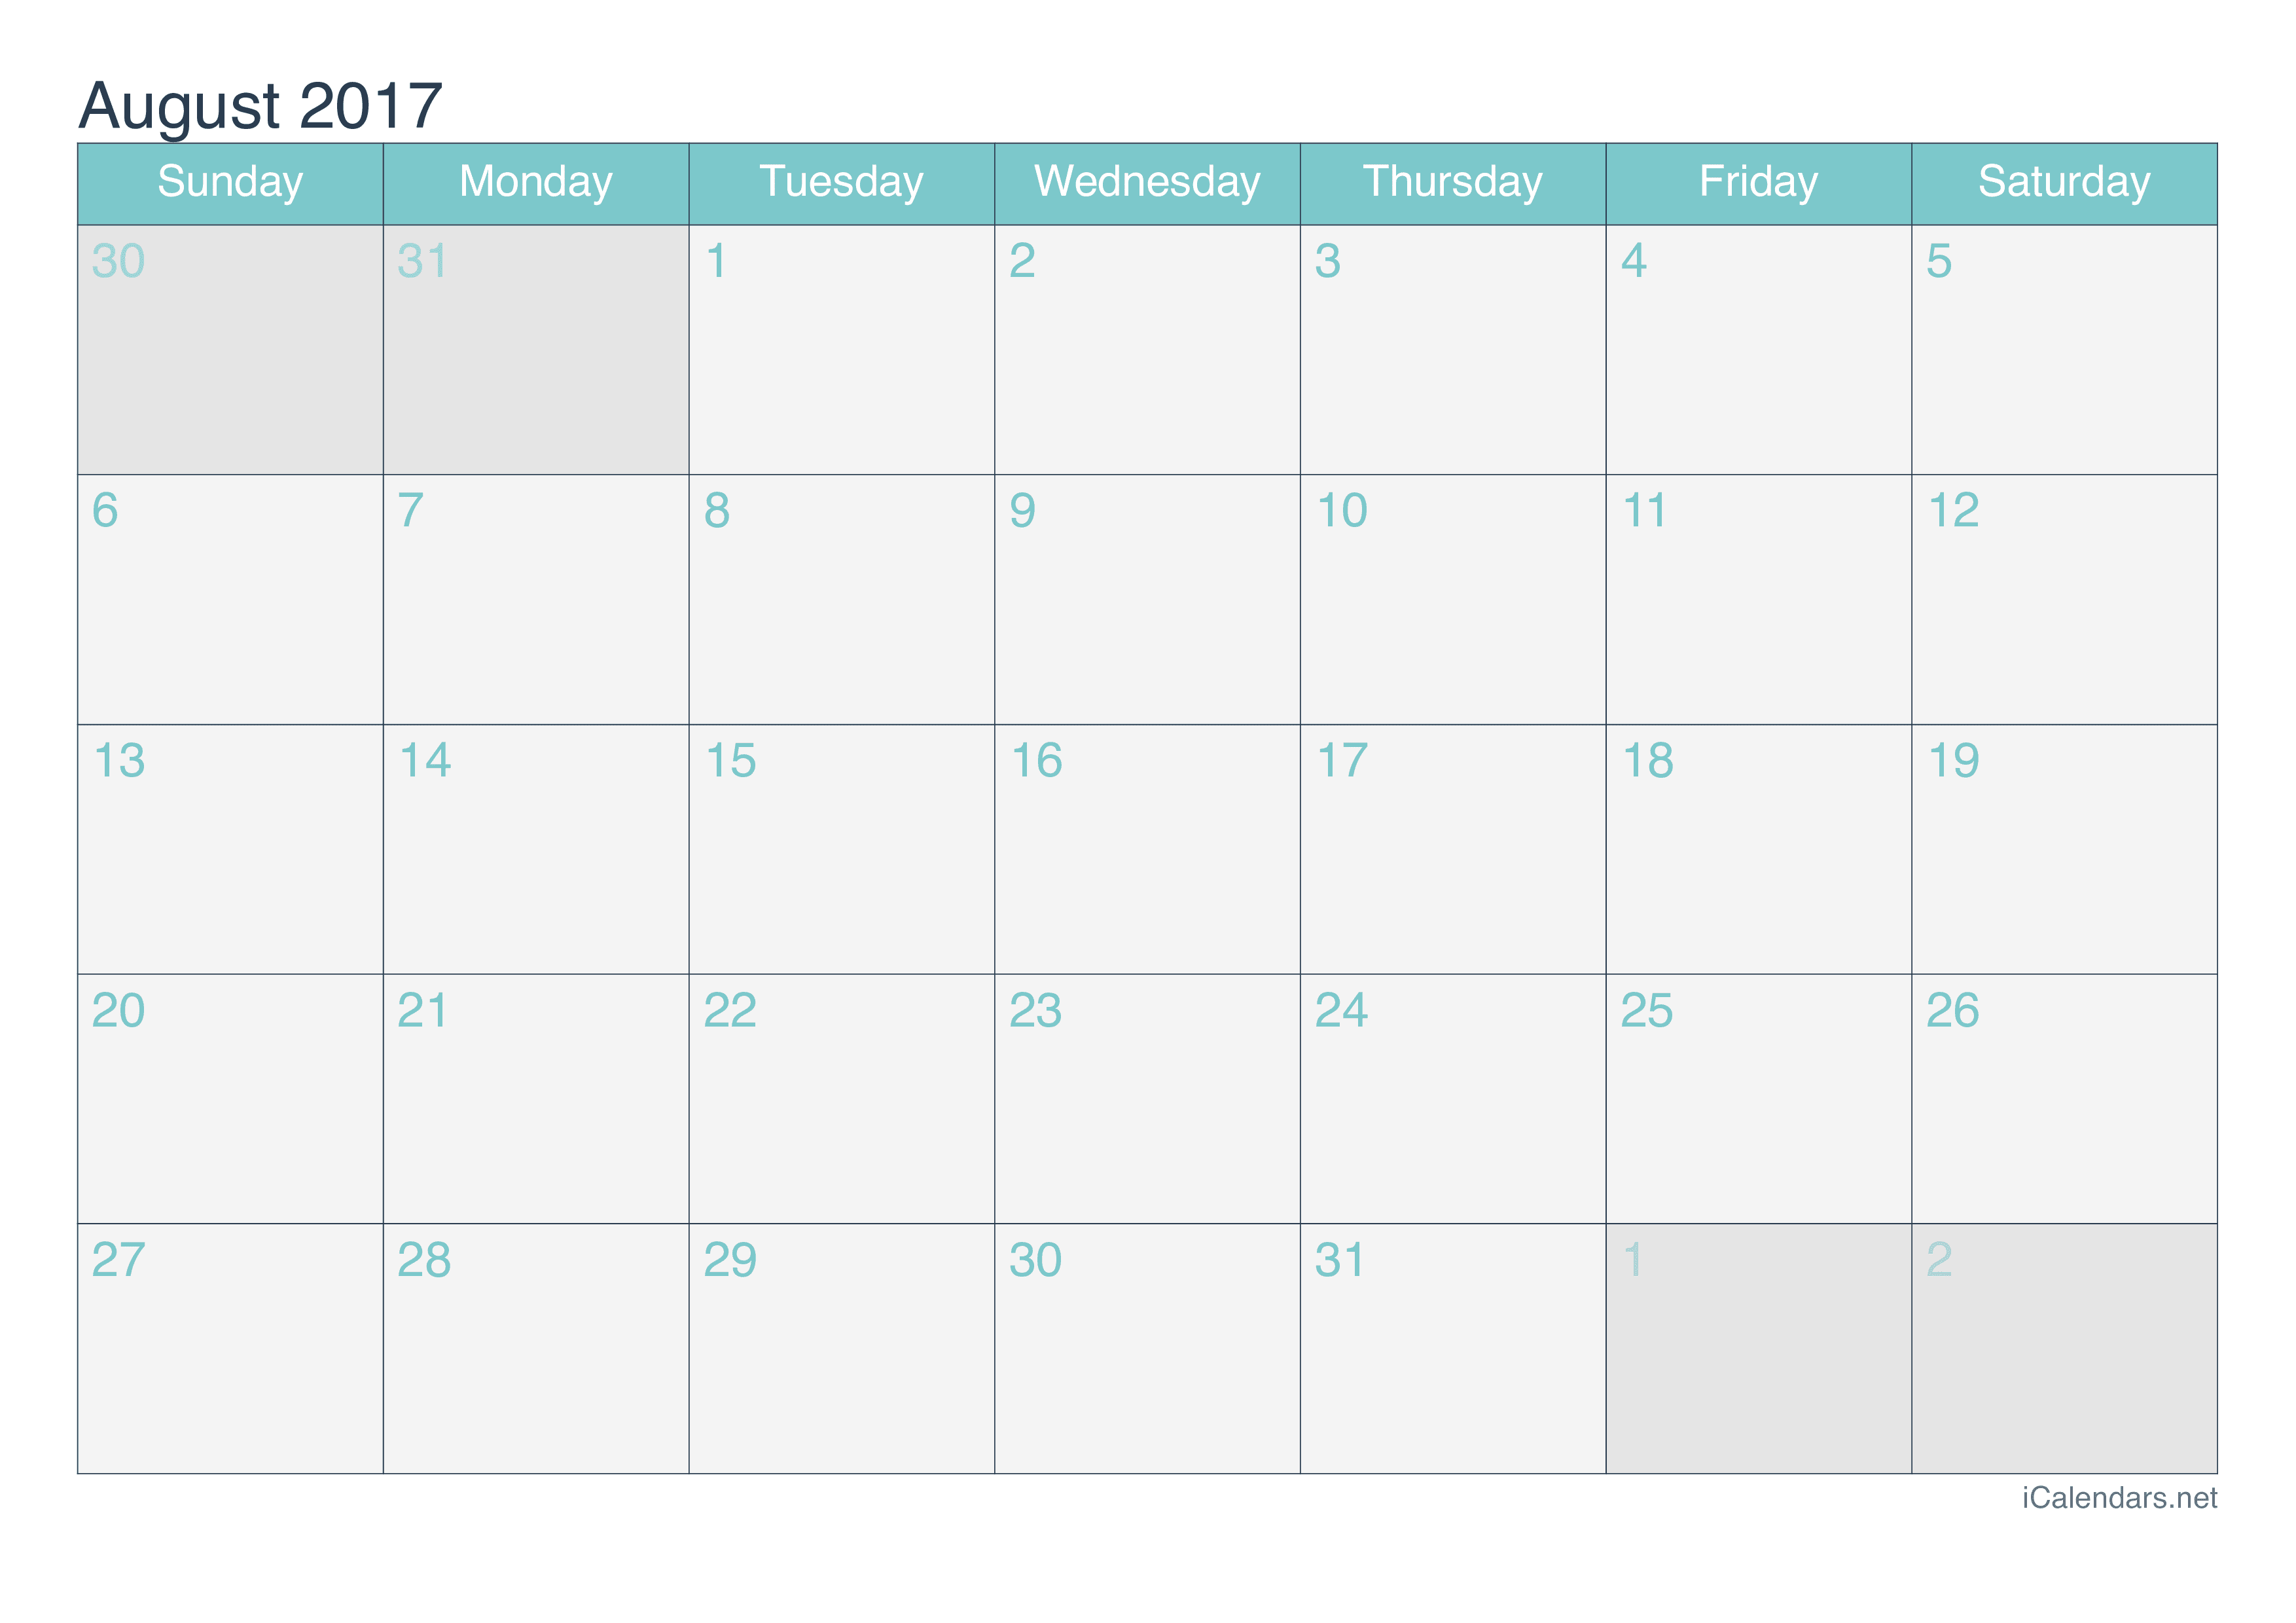 August 2017 Printable Calendar icalendars net